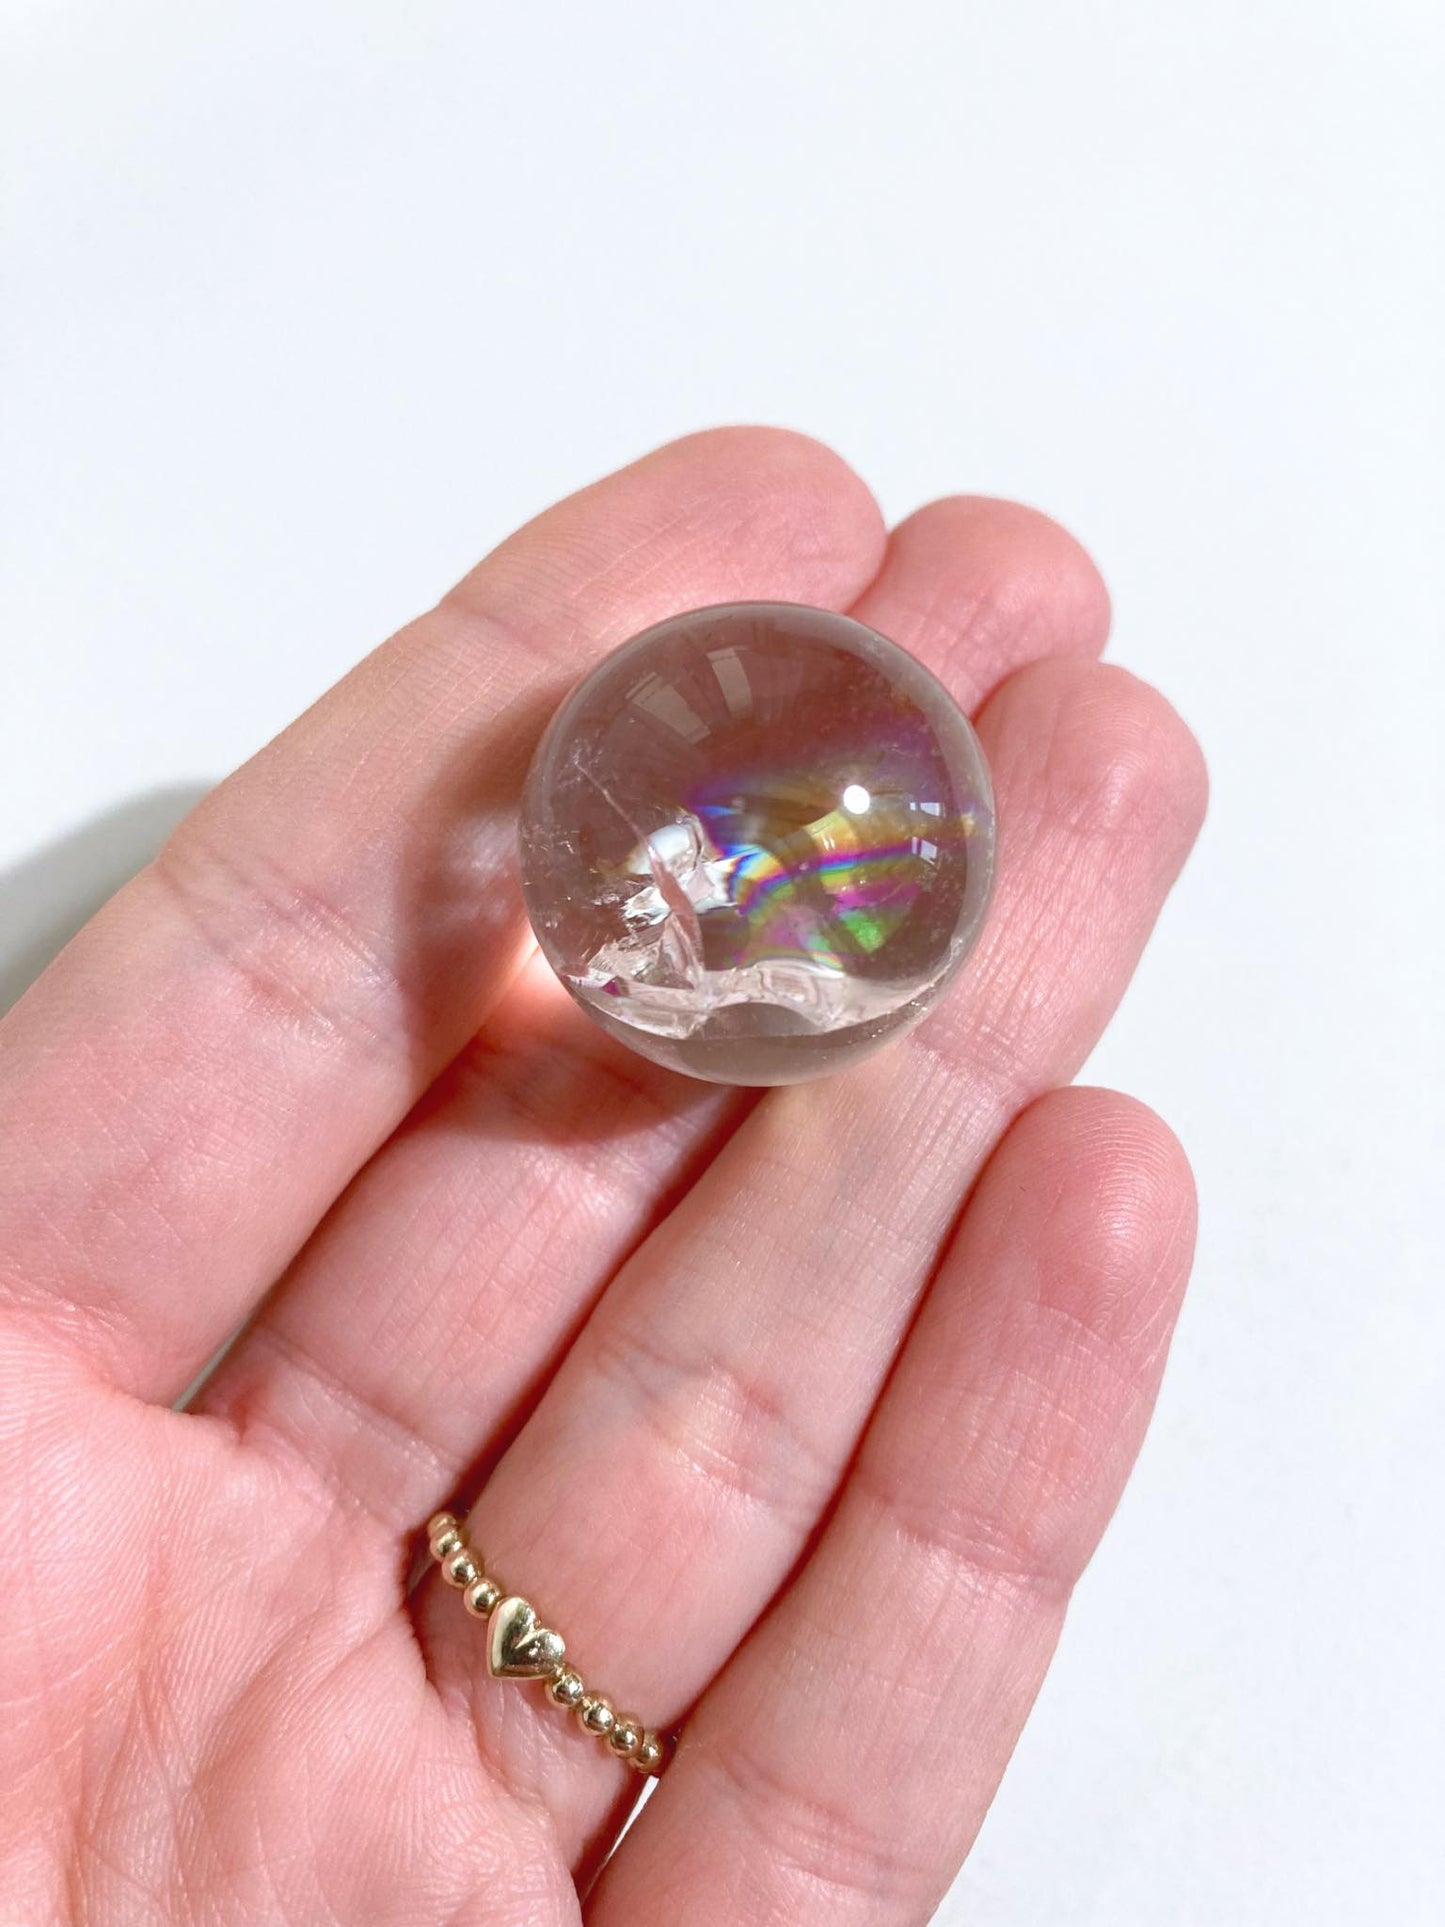 Bergkristall Regenbogen Kugel . Clearquartz Rainbow Sphere 2 -2.5cm- High Quality Heat treated